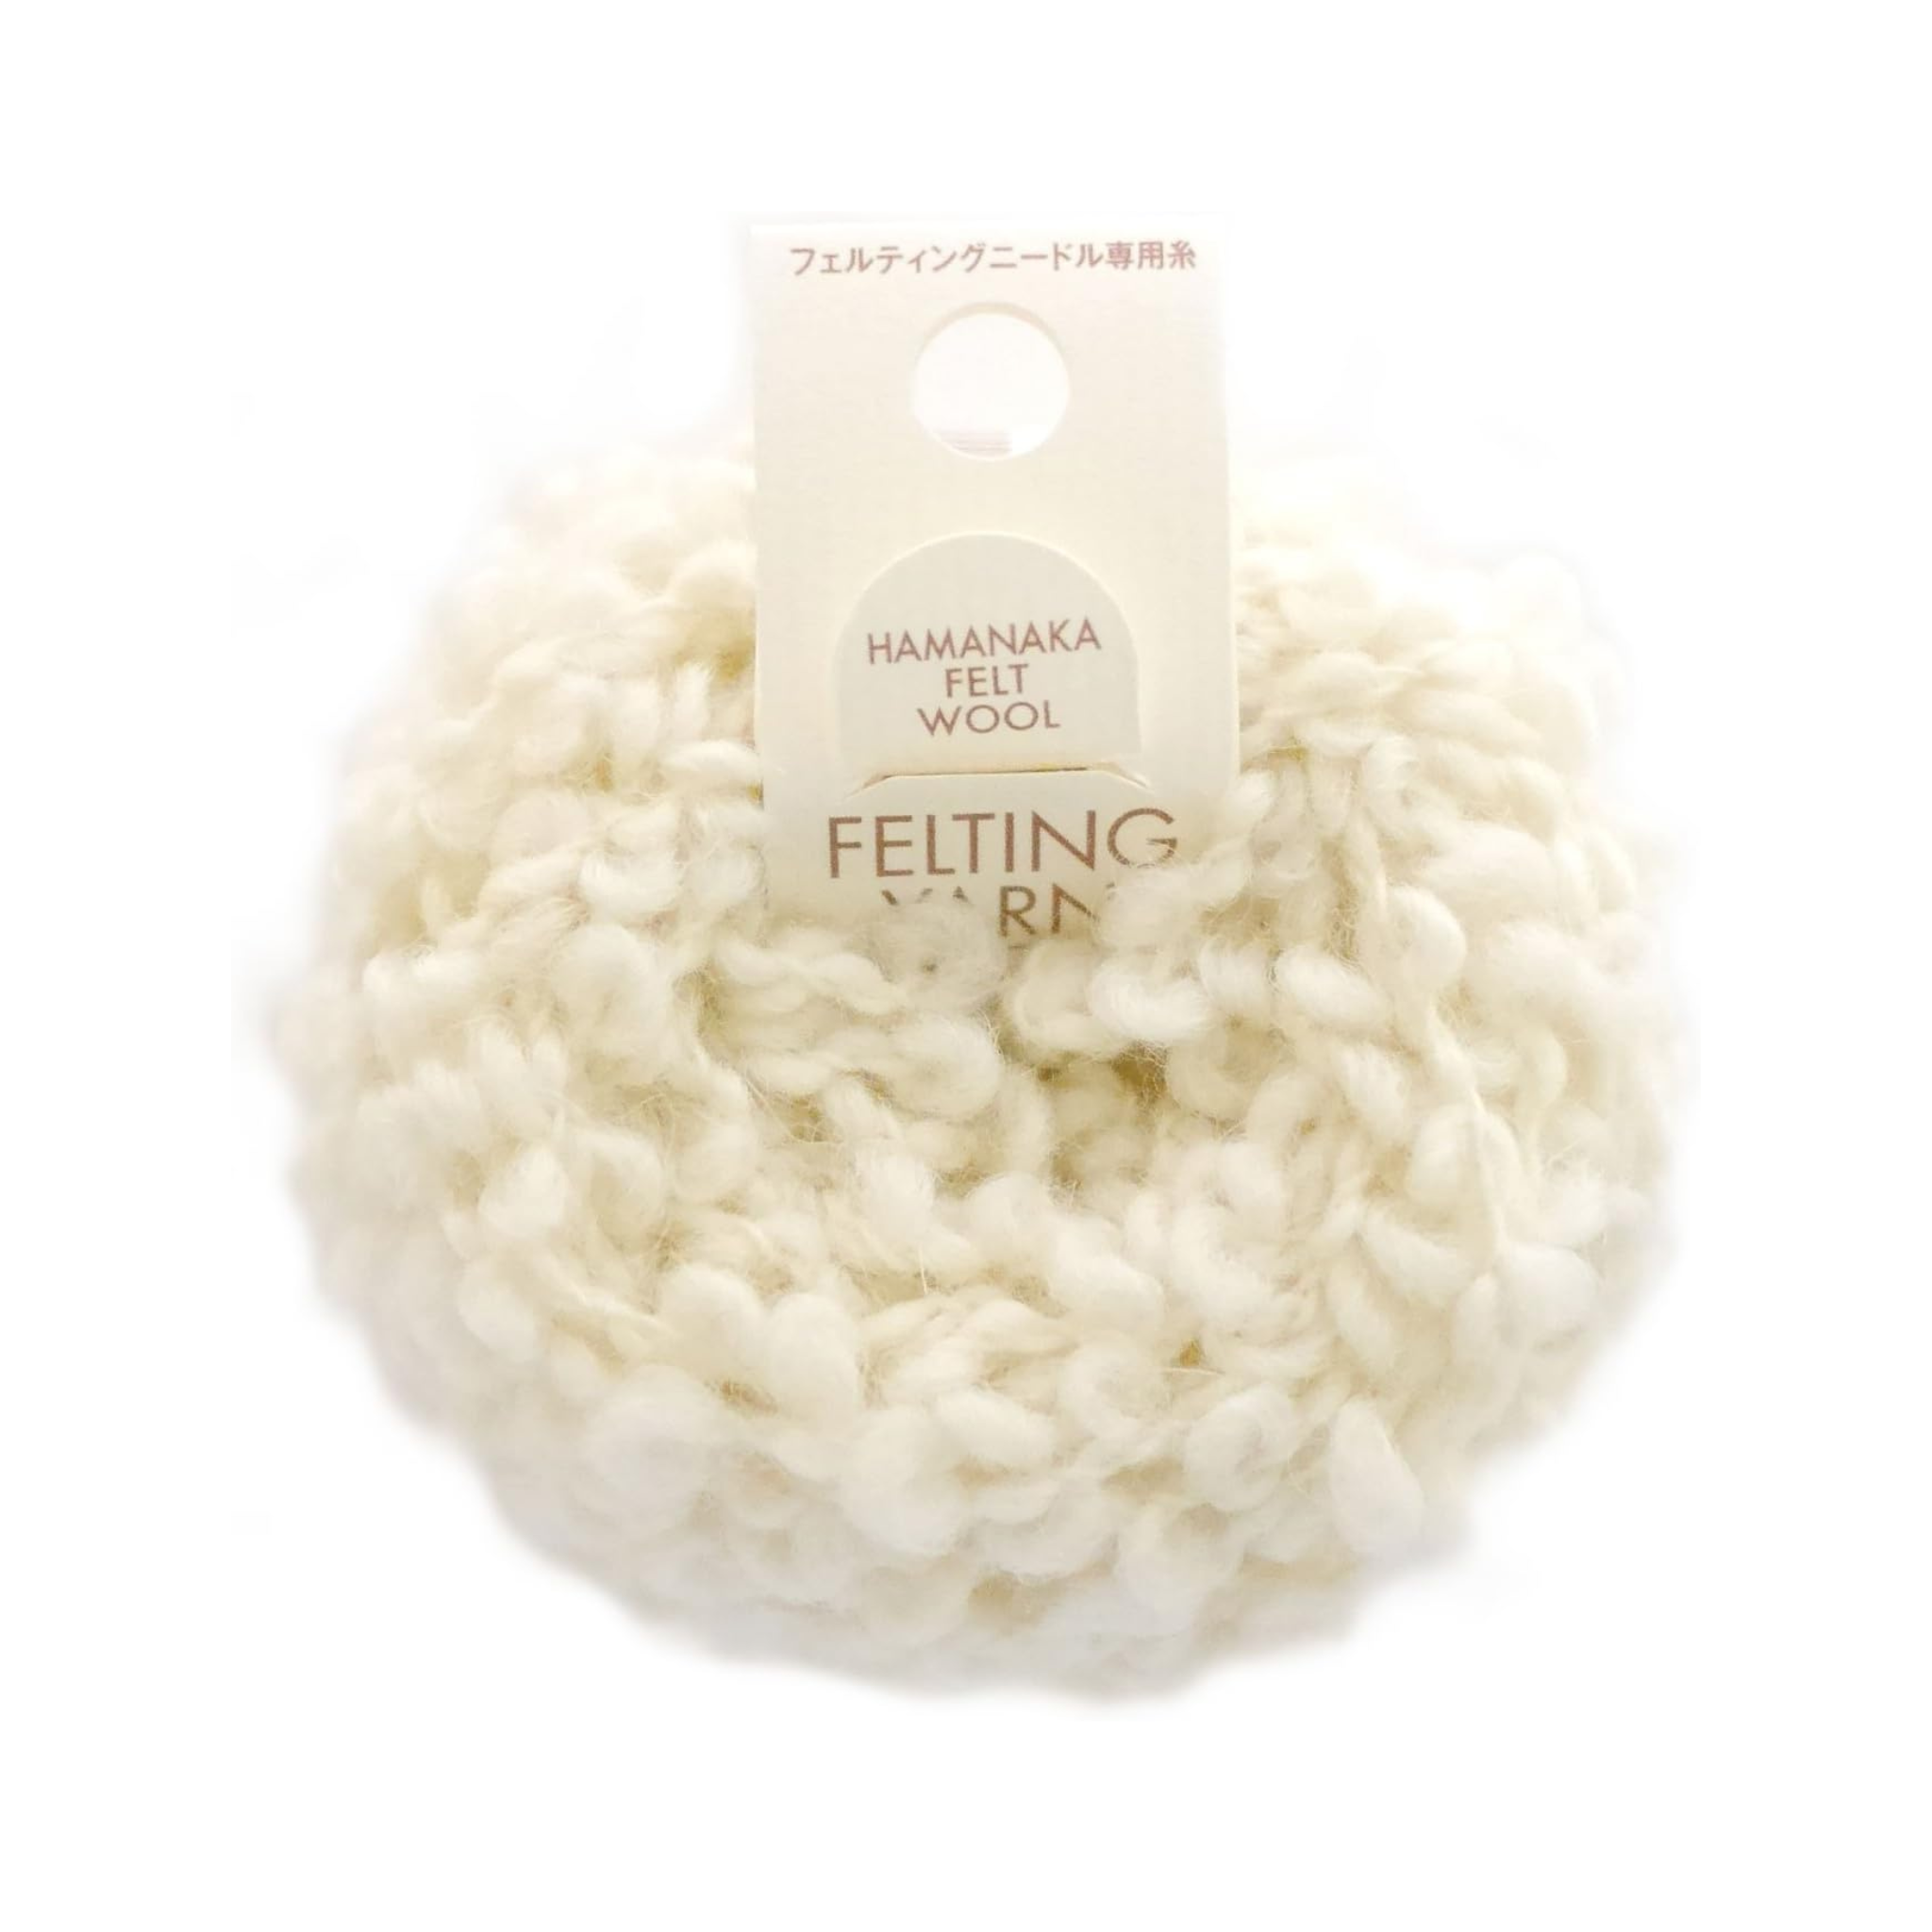 Hamanaka Felting Yarn Curly Felt Wool for Needle Felting, 10m